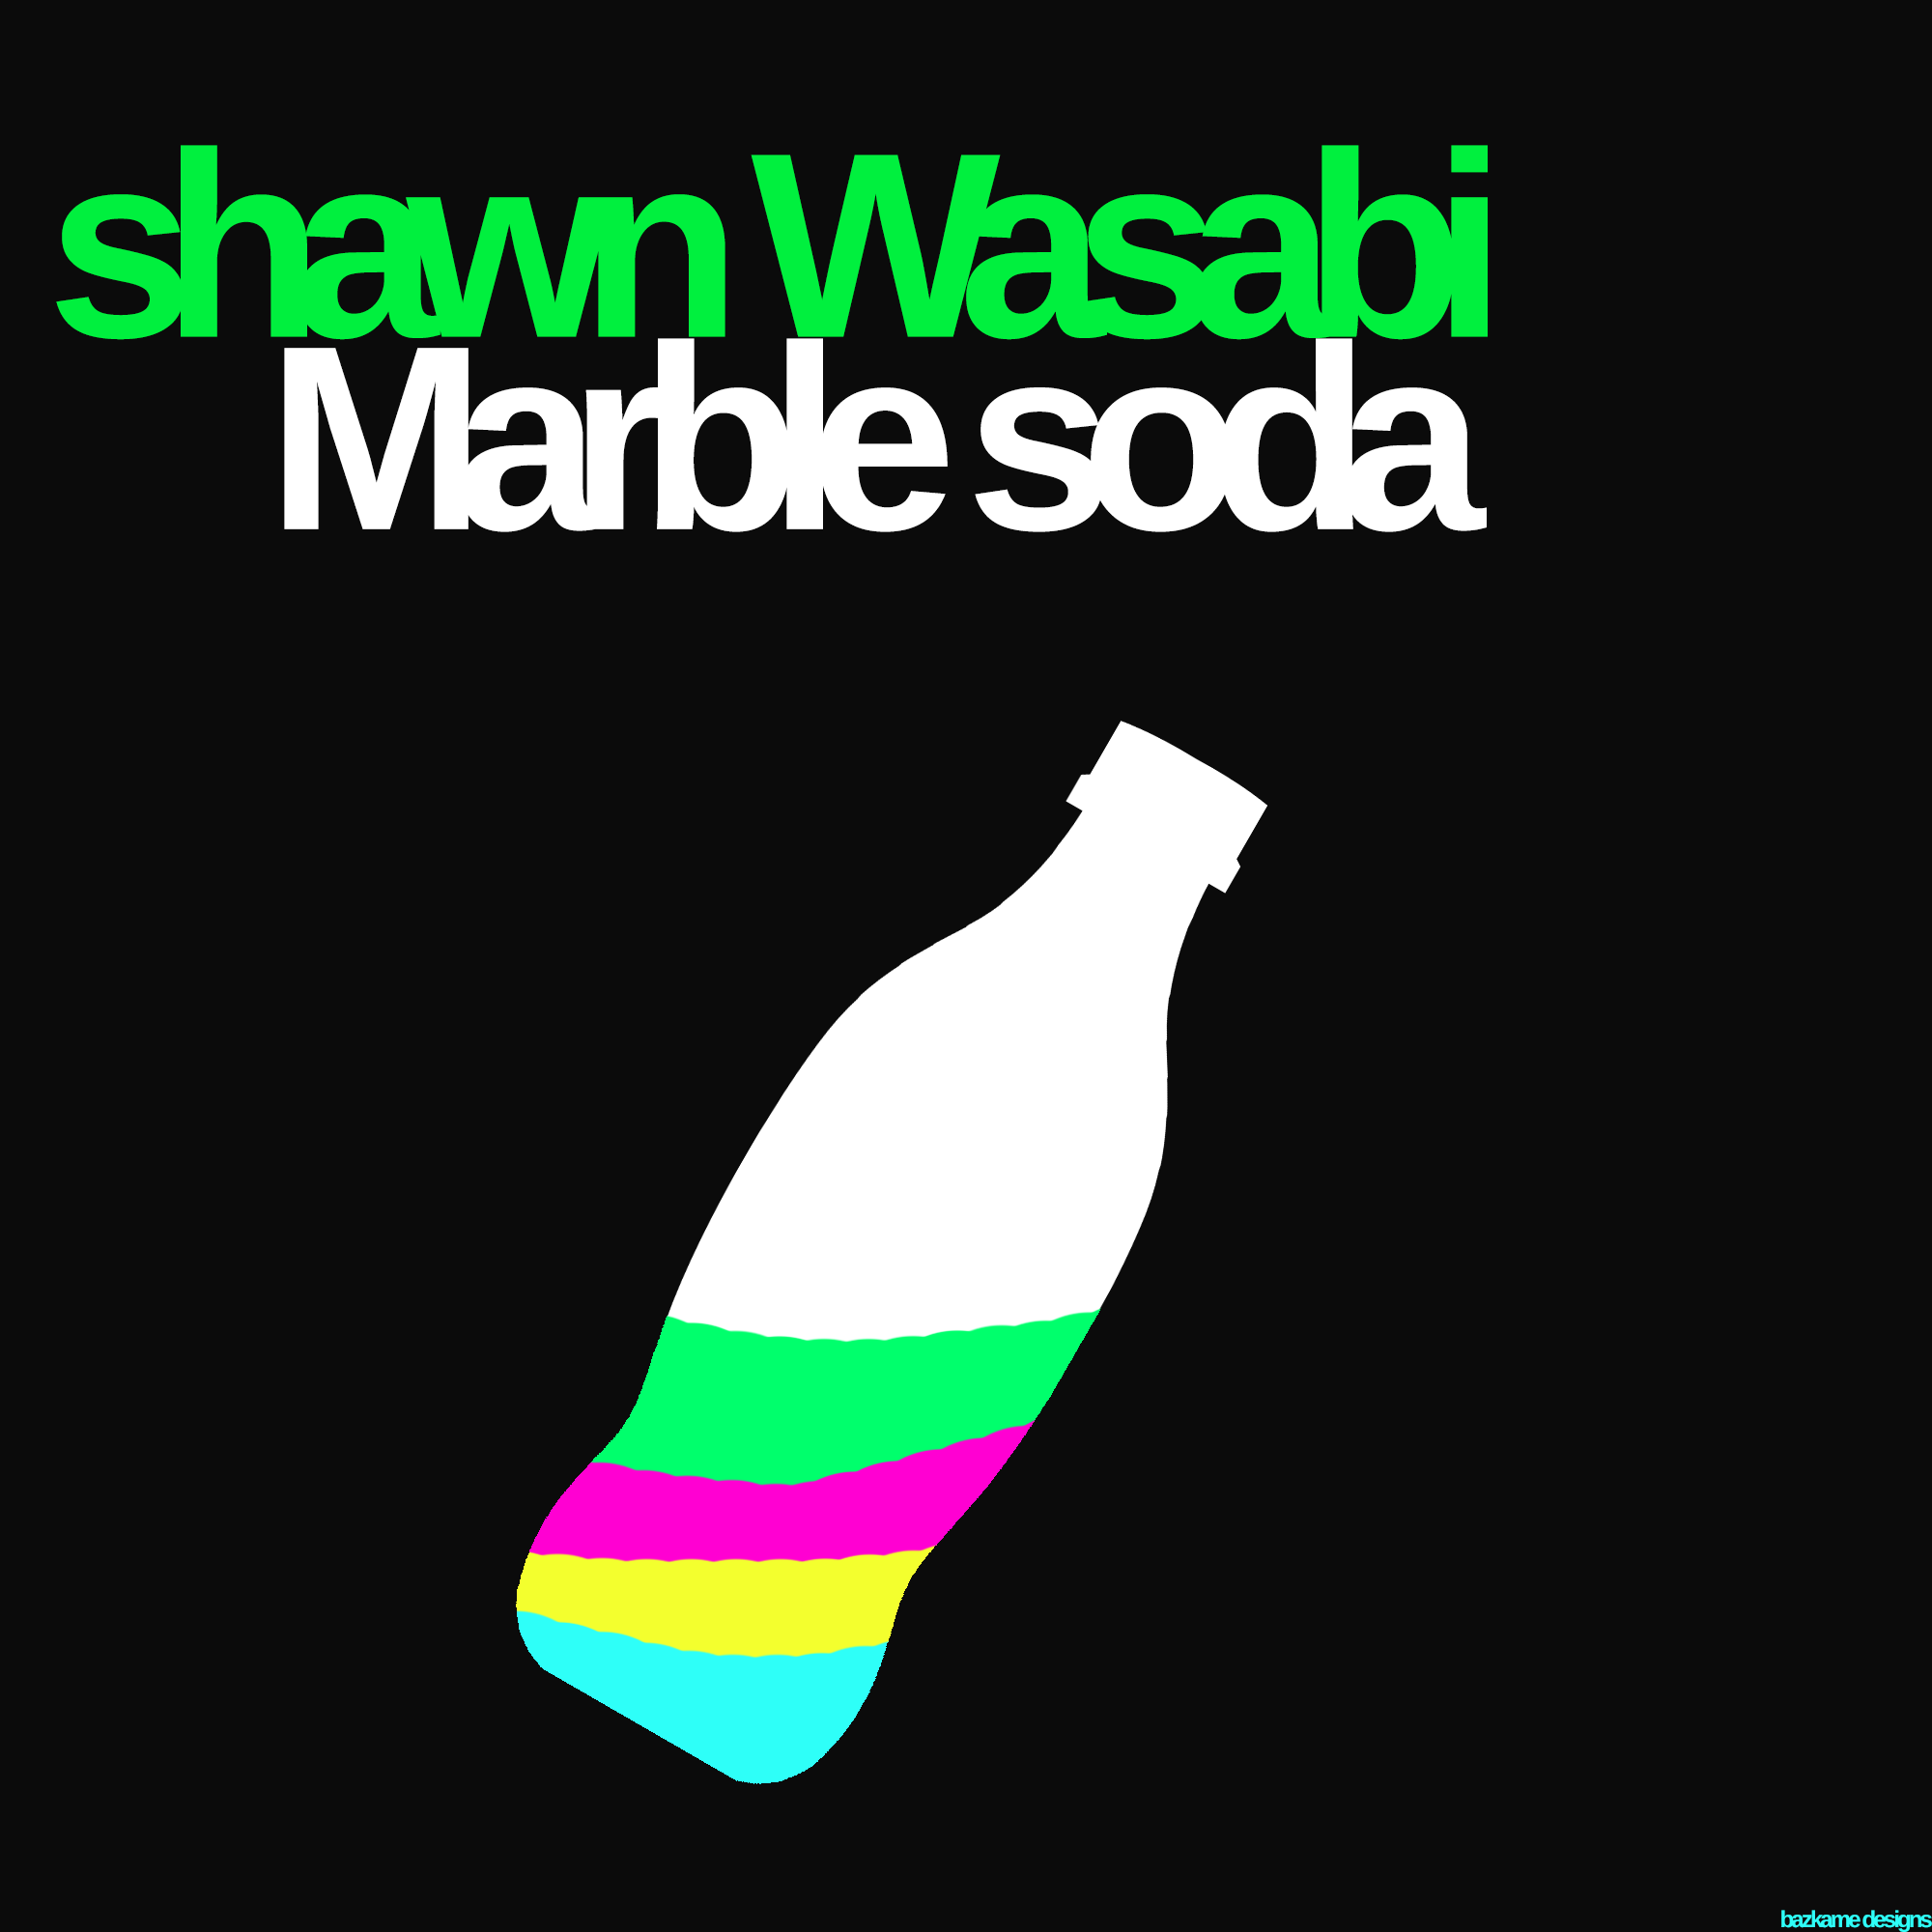 Marble Soda song Fan Art, for shawn wasabi by bazkame on DeviantArt